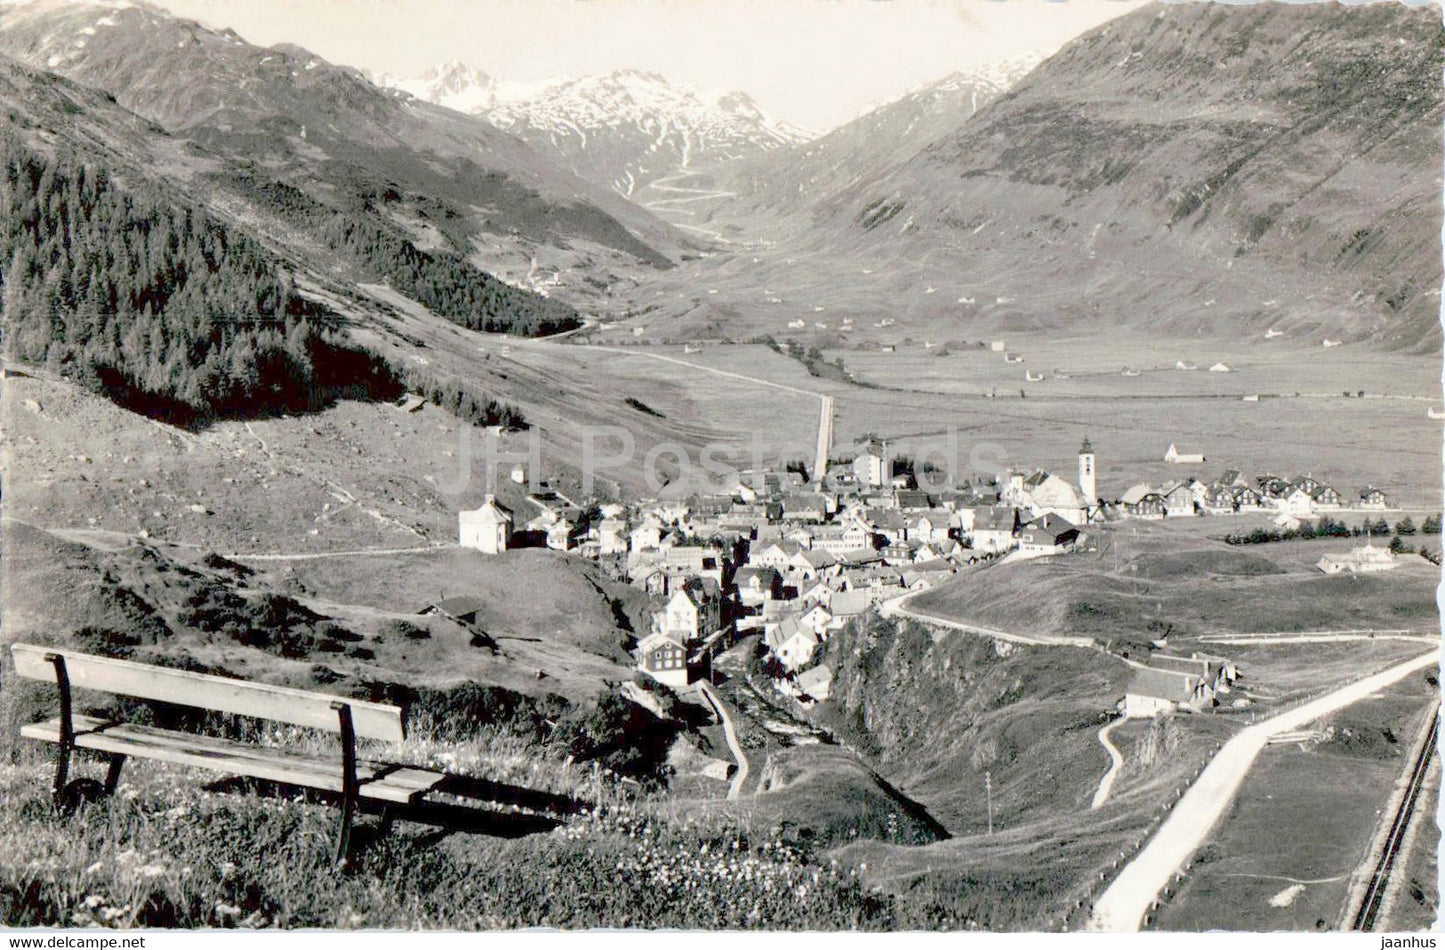 Andermatt 1444 m gegen die Furka - military mail - Feldpost - 3374 - old postcard - 1941 - Switzerland - used - JH Postcards